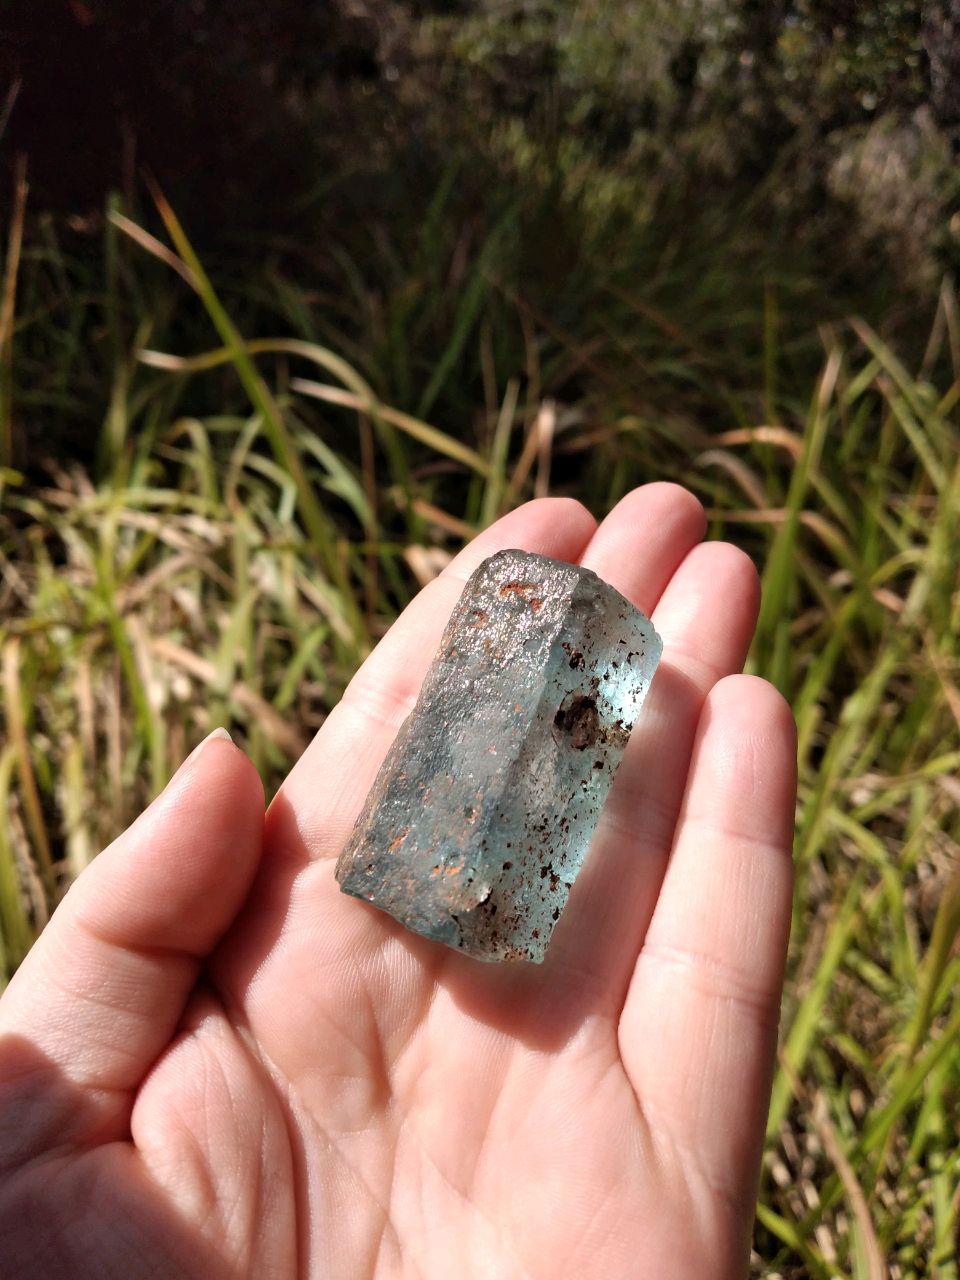 Malawi Aquamarine Blue Beryl Natural Gemstone - 226 Carats - Jewelry Grade!